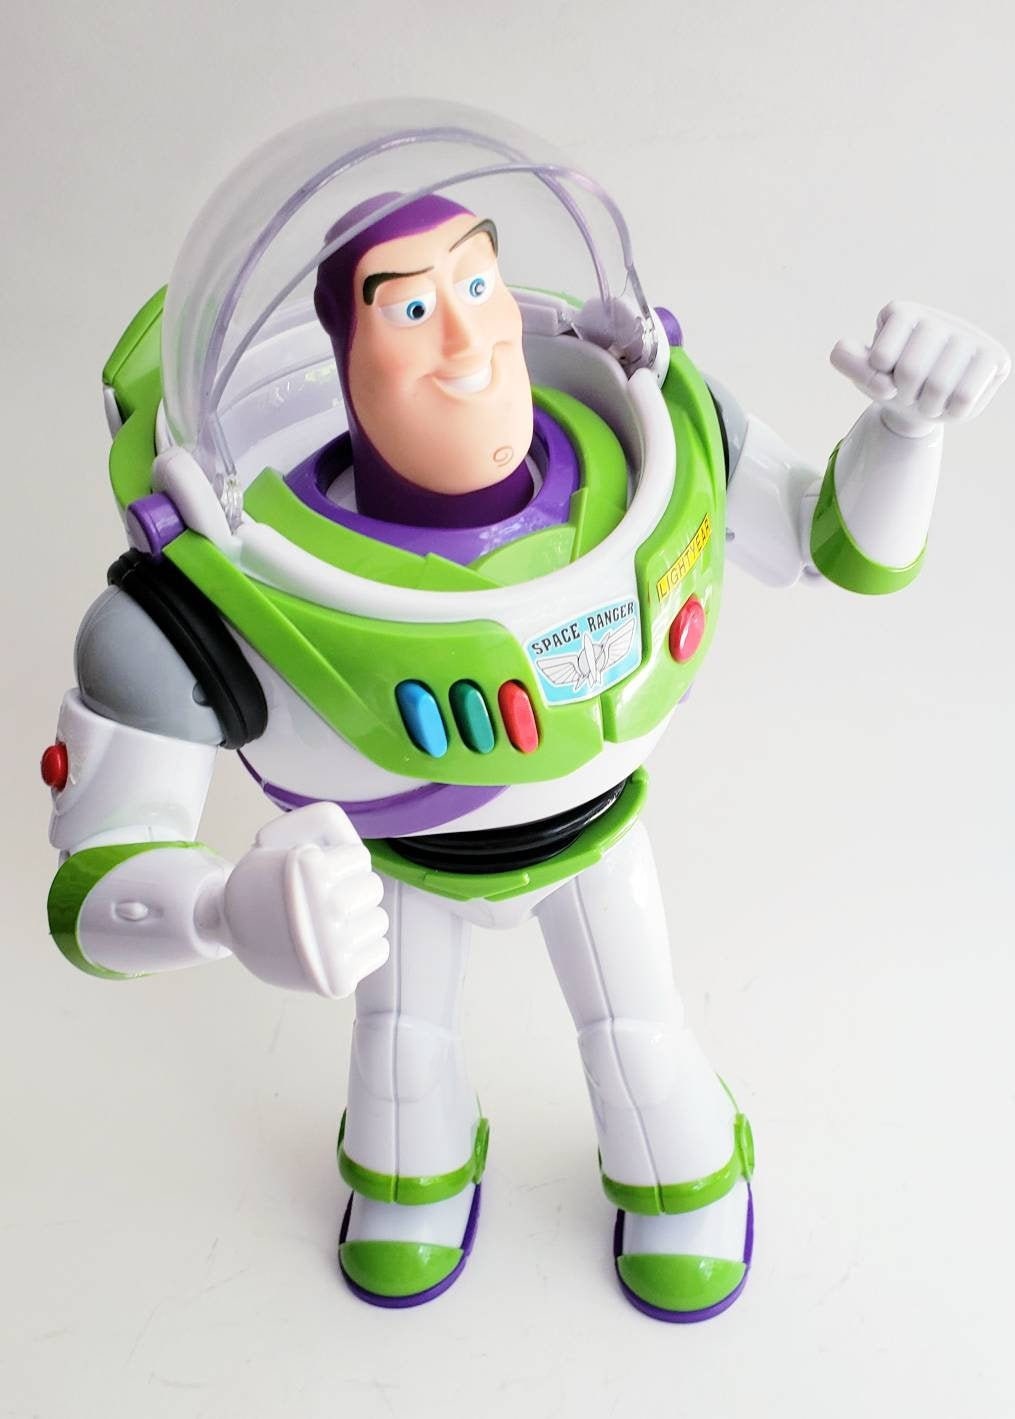 heilig hoek dans Disney Pixar Thinkway Toys Toy Story Buzz Lightyear - Etsy Hong Kong